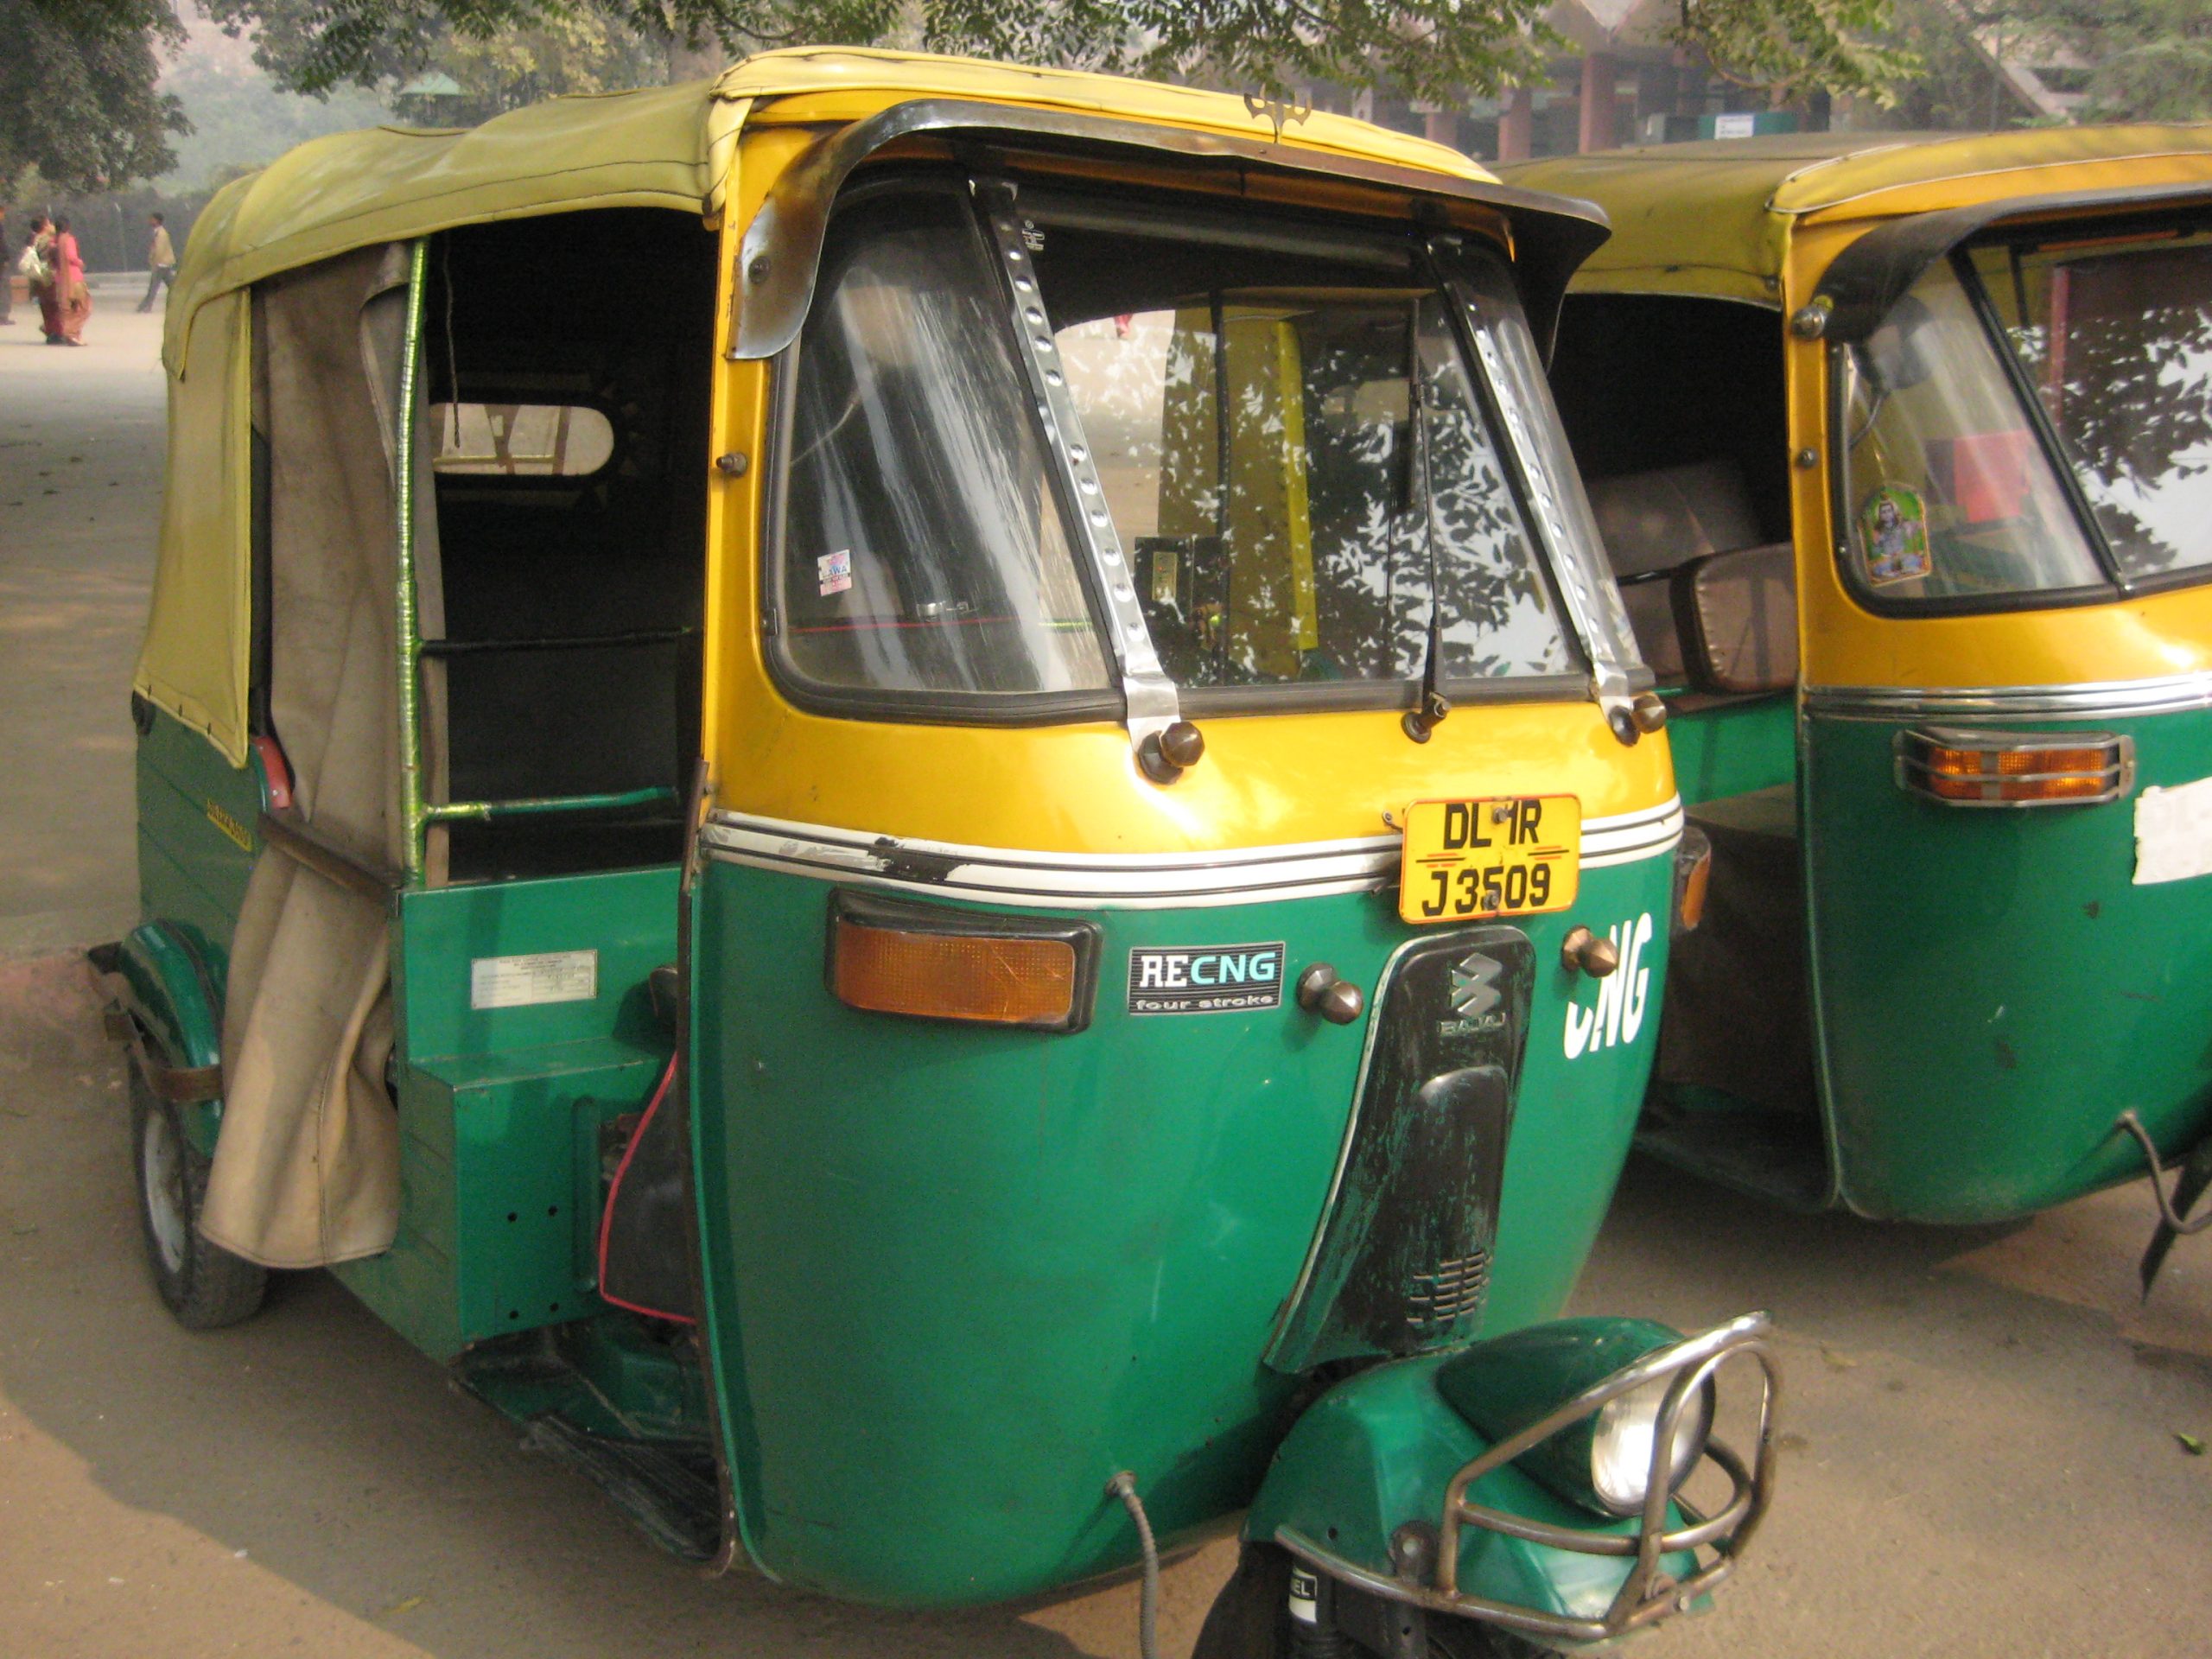 Auto-rickshaw-getting-around-jaipur